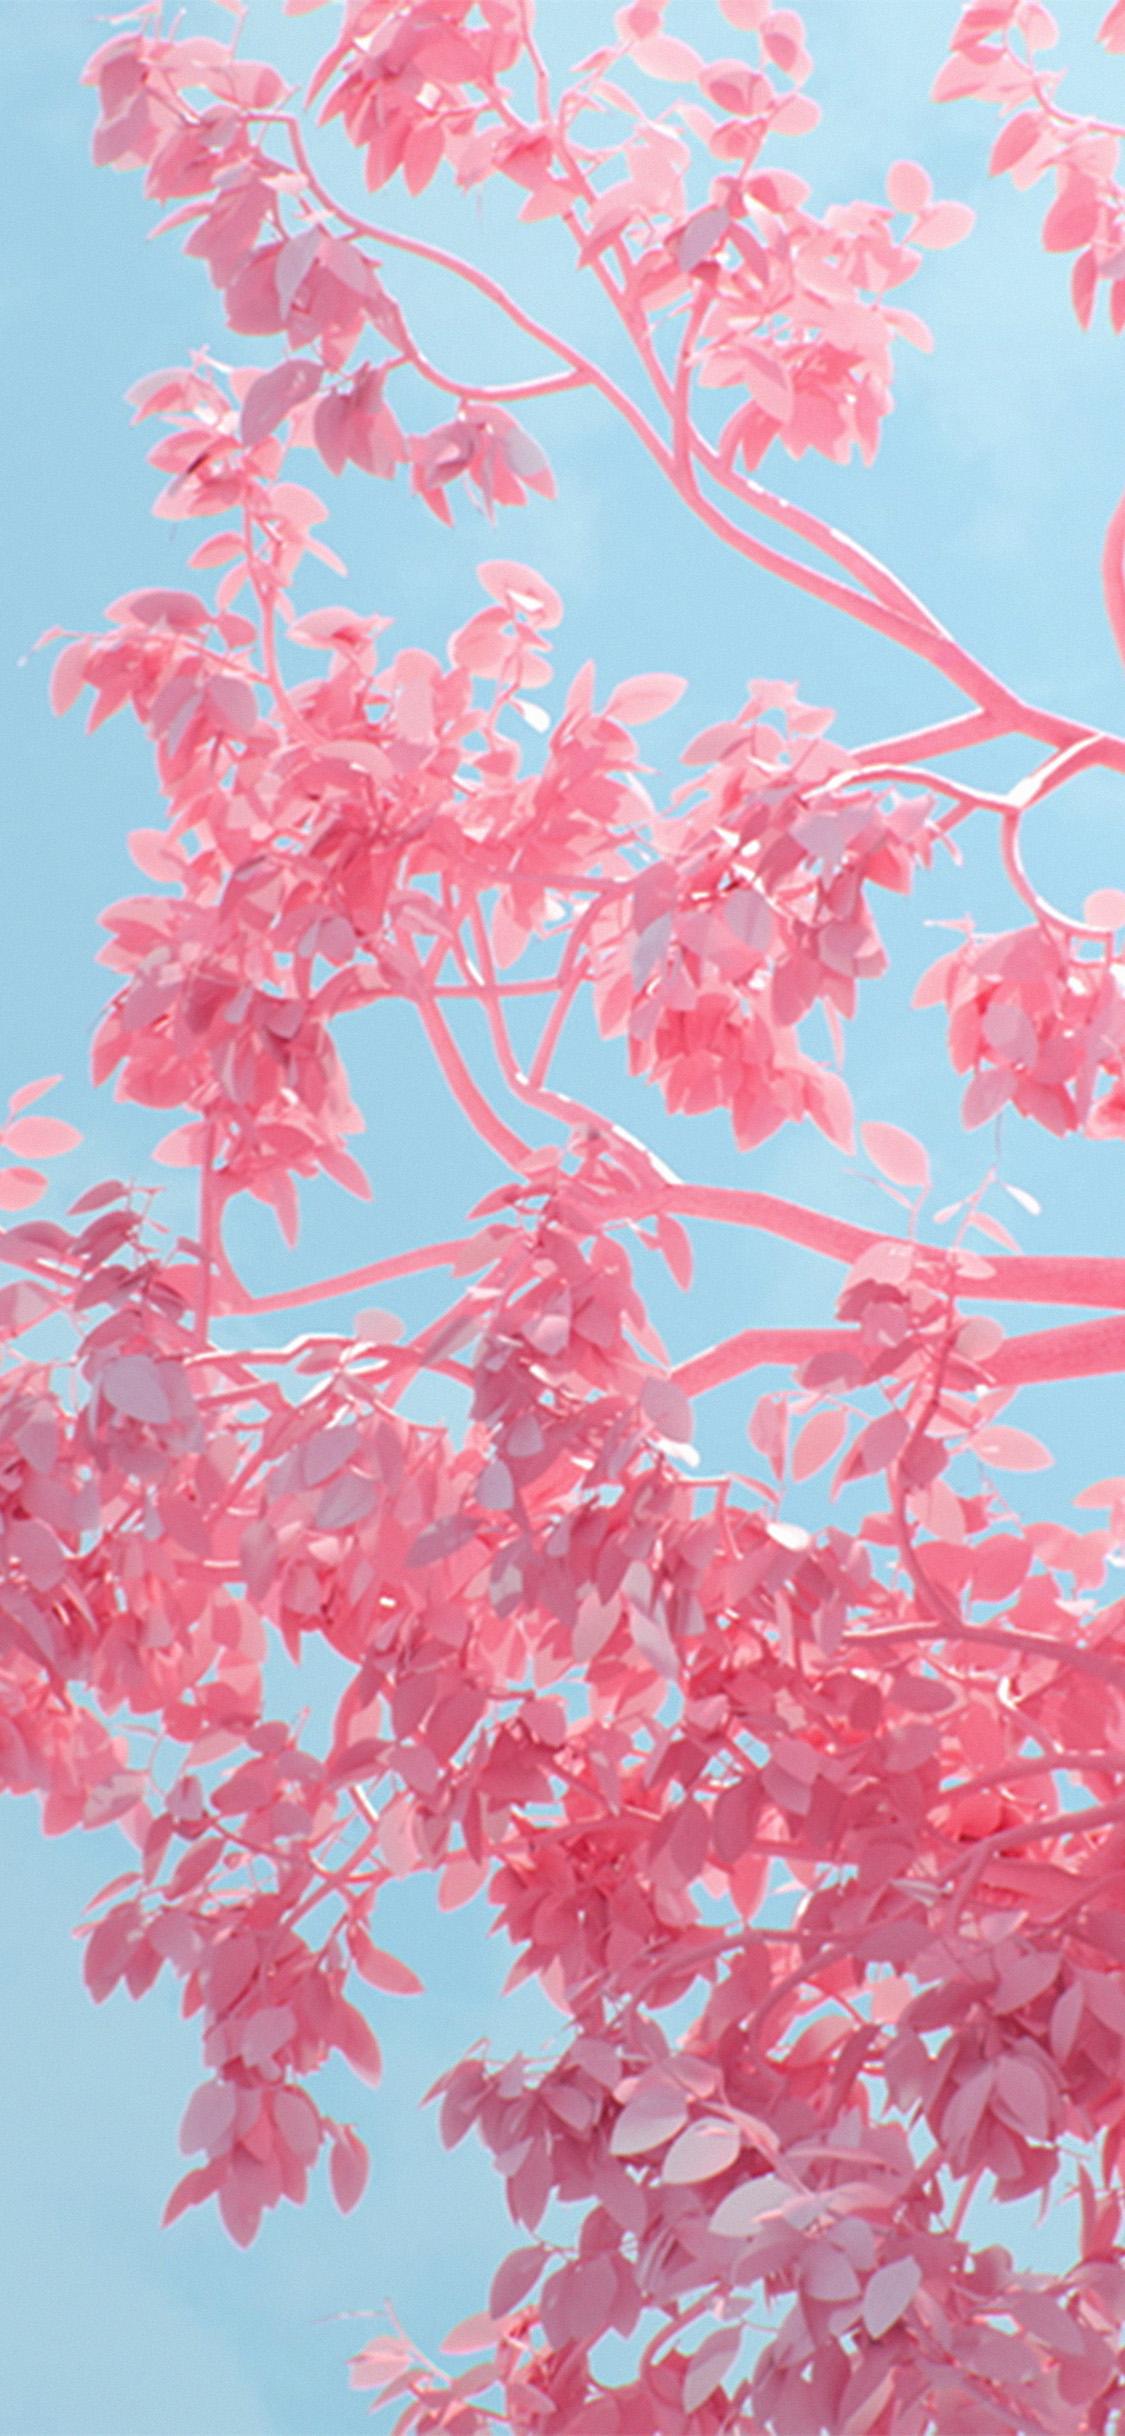 Share more than 166 pink design wallpaper latest - 3tdesign.edu.vn